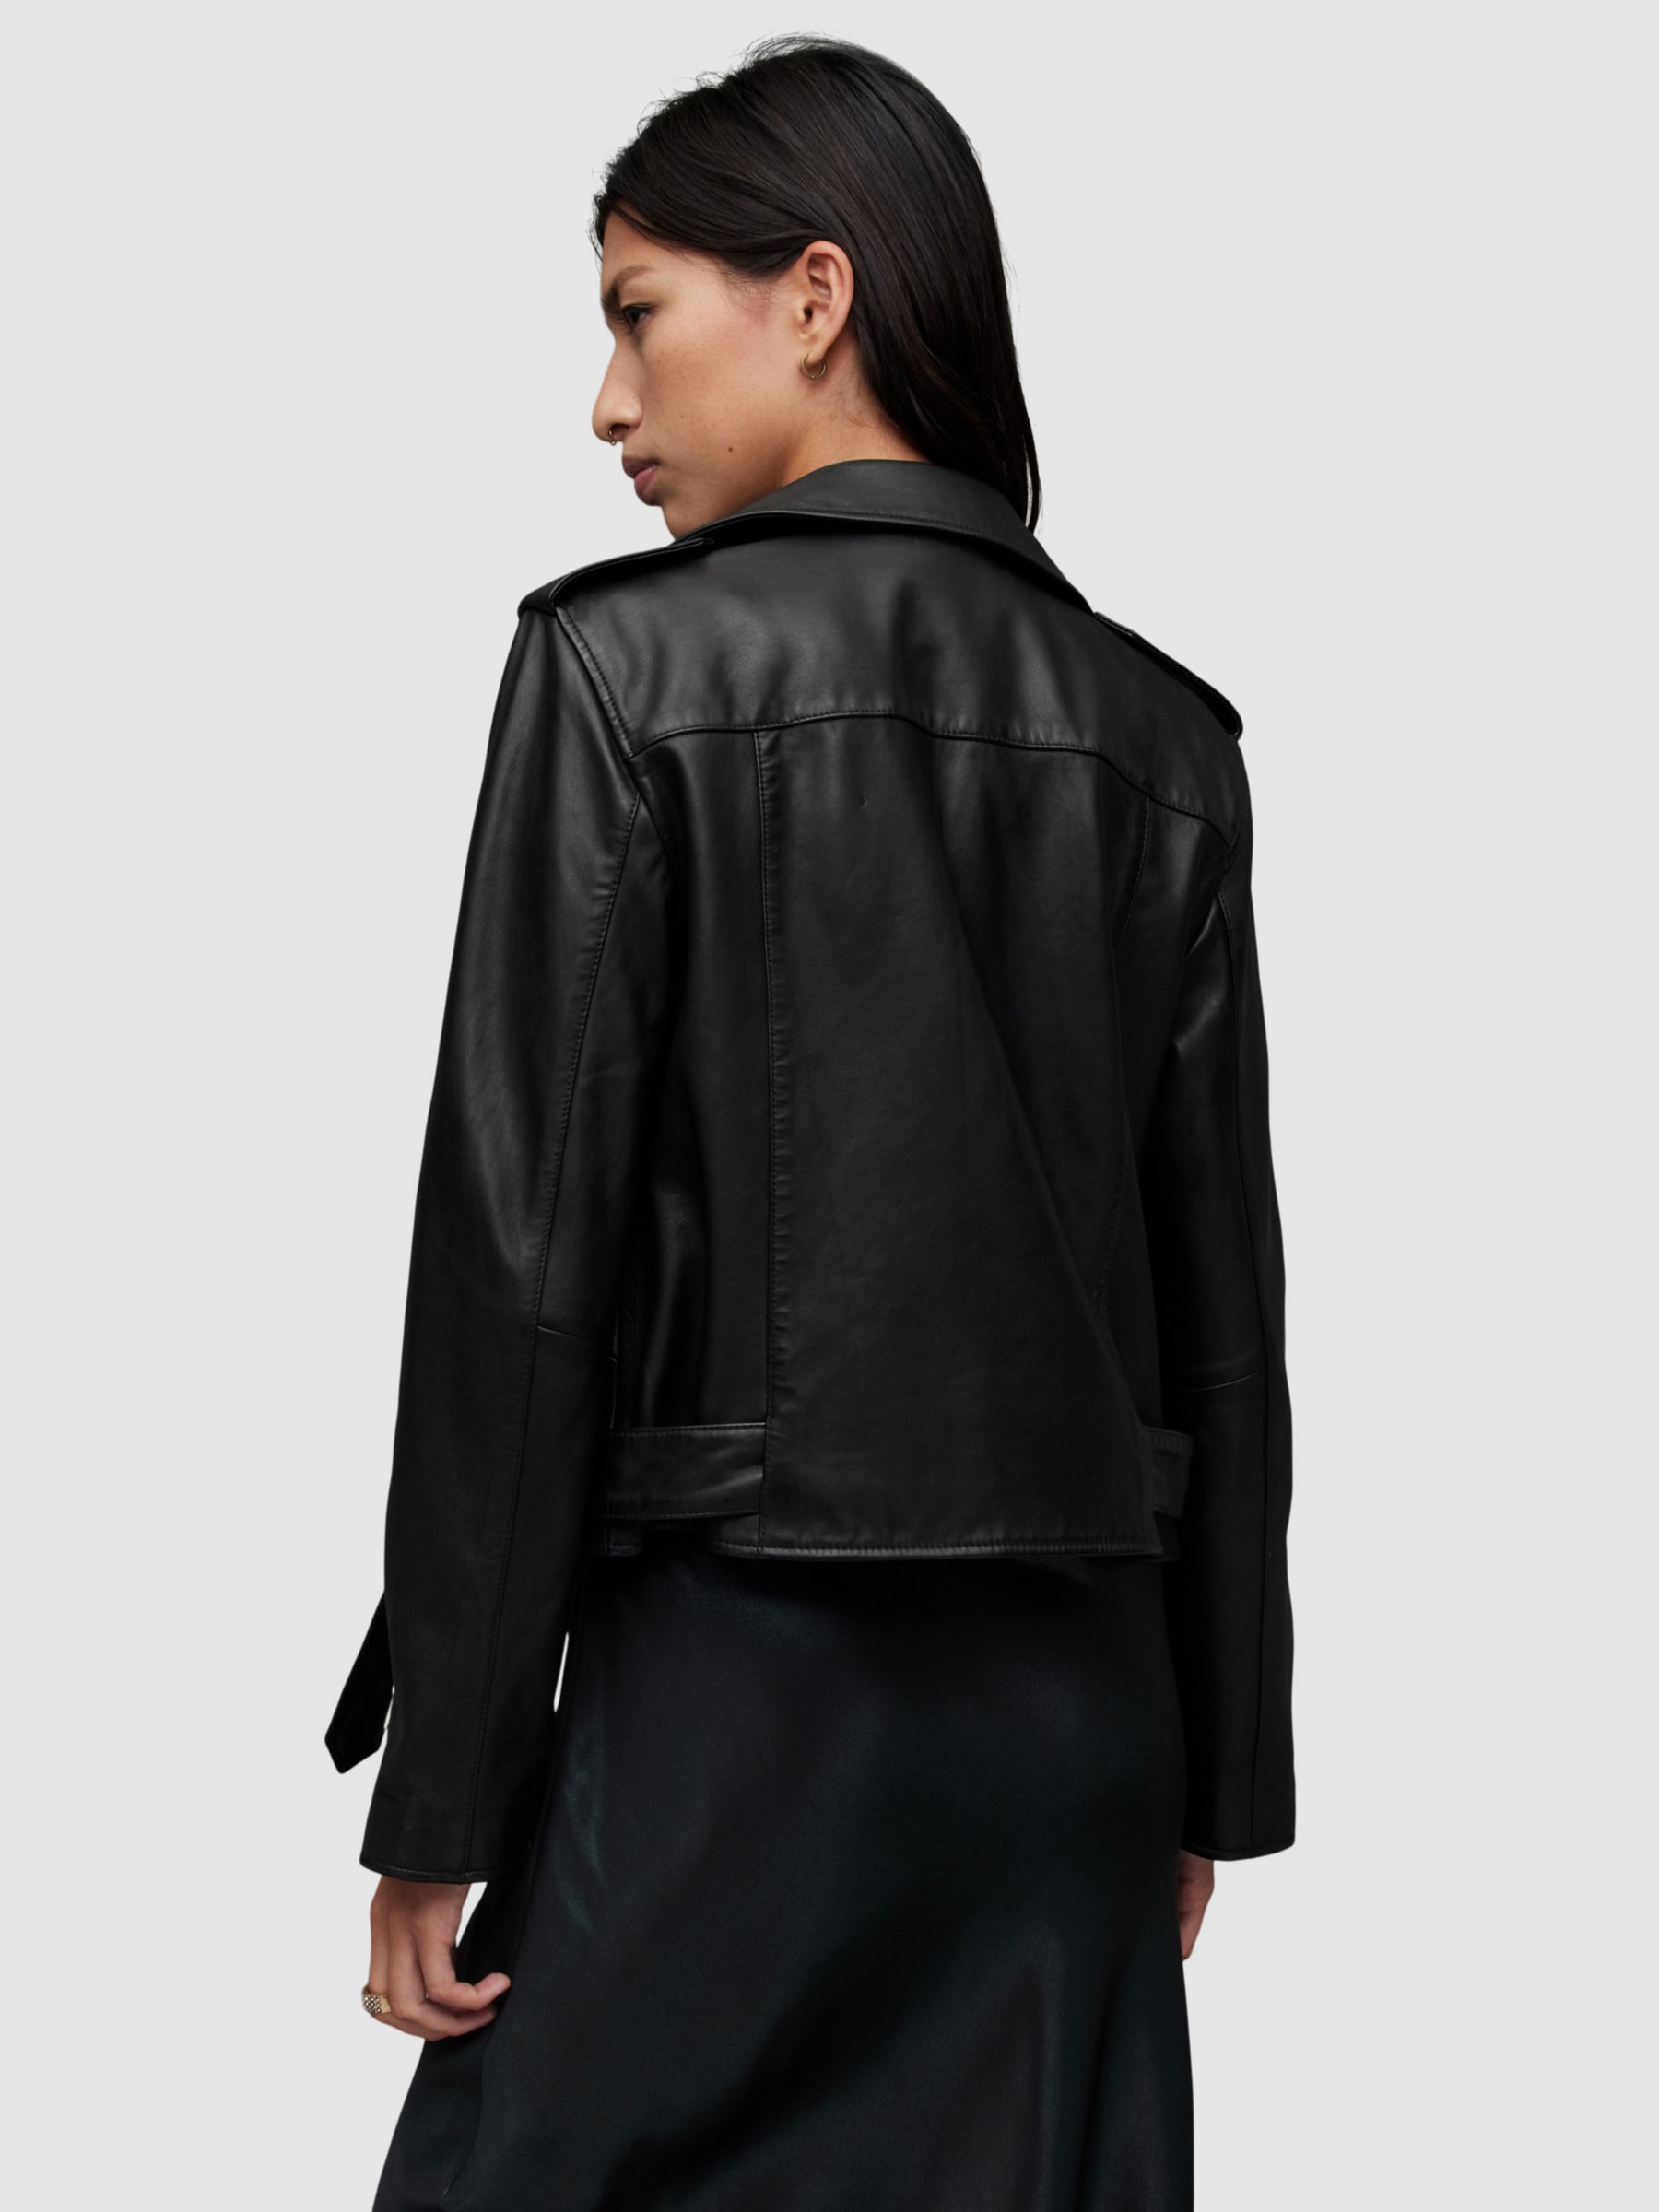 AllSaints Balfern Leather Biker Jacket, Black/Gold at John Lewis & Partners